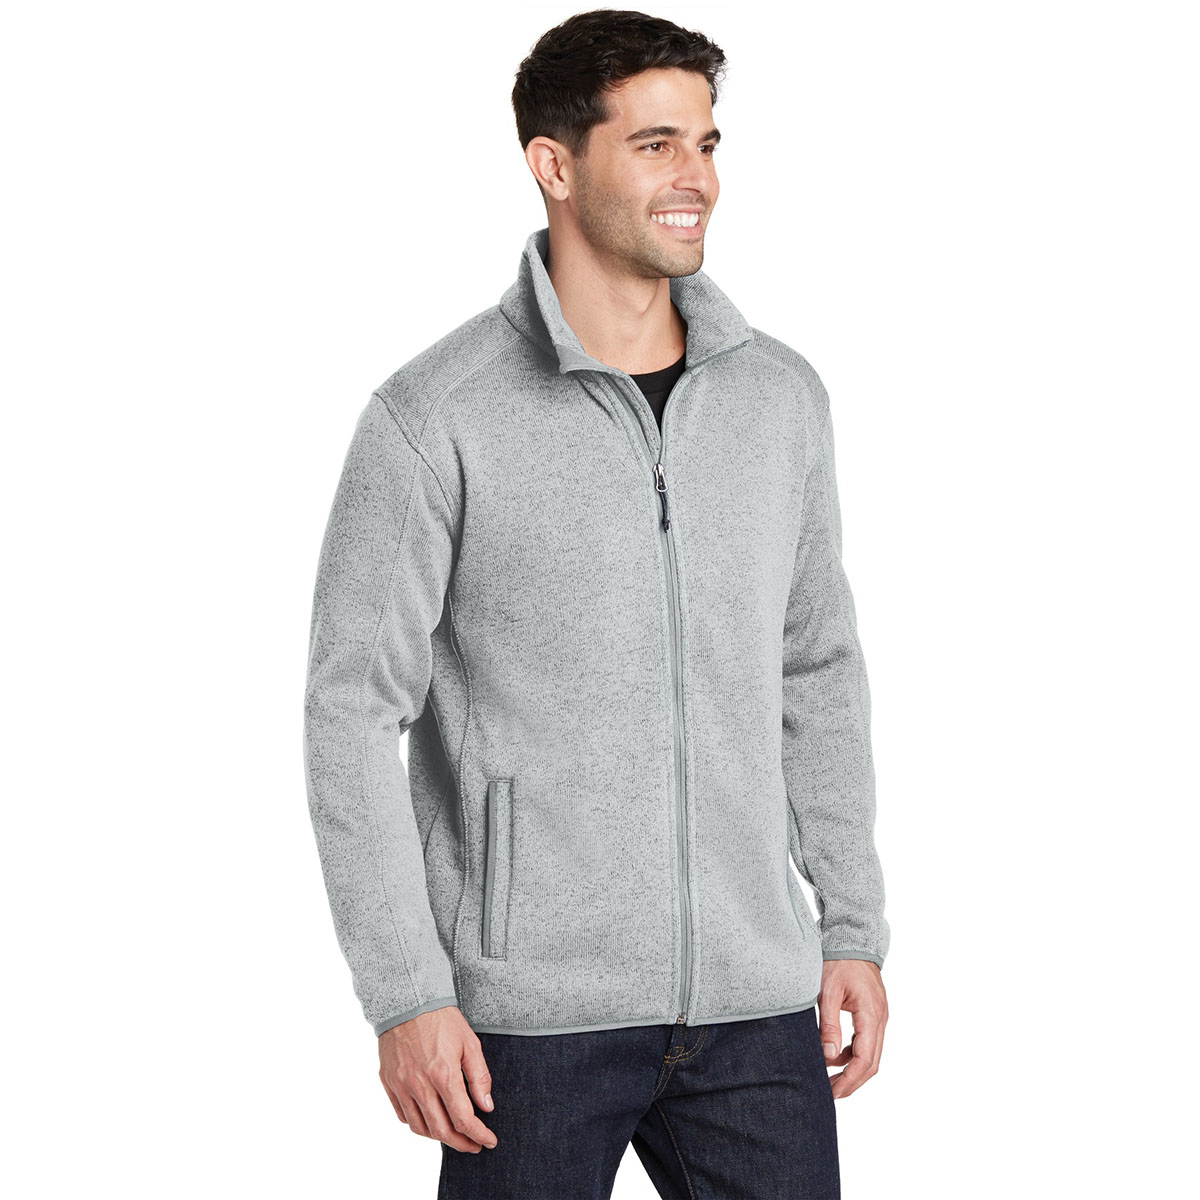 Port Authority F232 Sweater Fleece Jacket - Grey Heather | FullSource.com